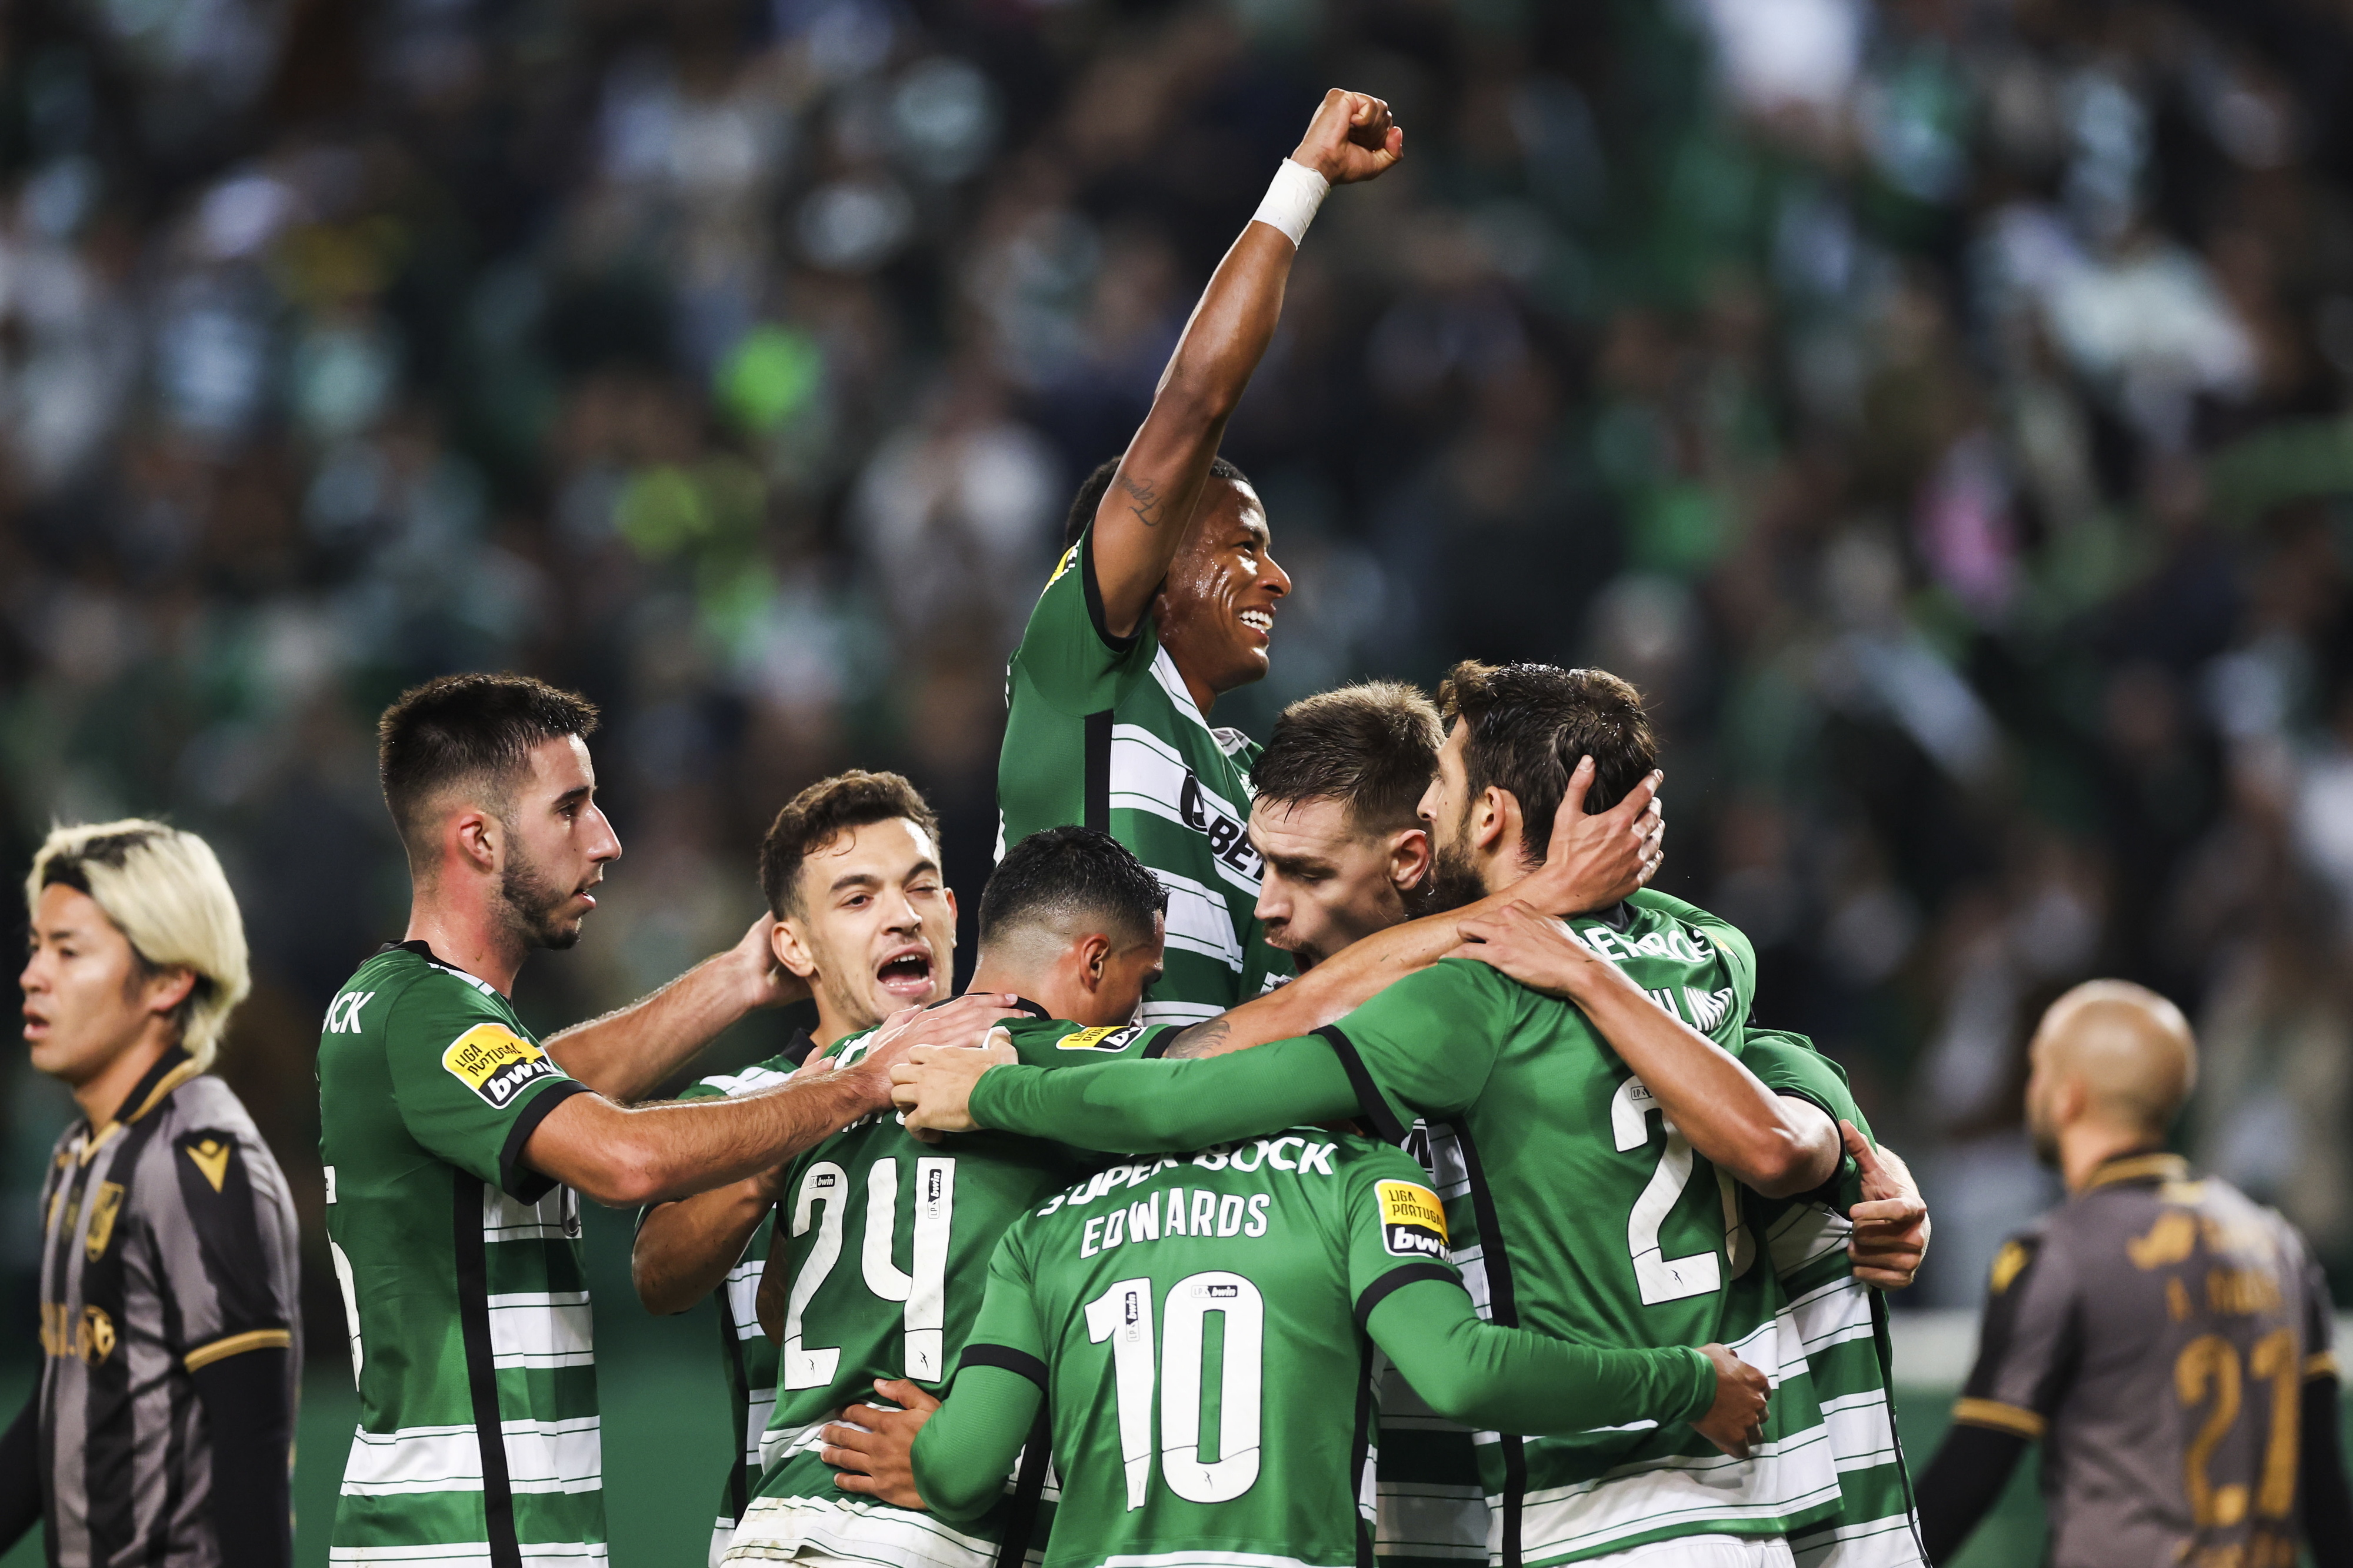 As 10 maiores goleadas entre FC Porto e Sporting CP - Blog bwin